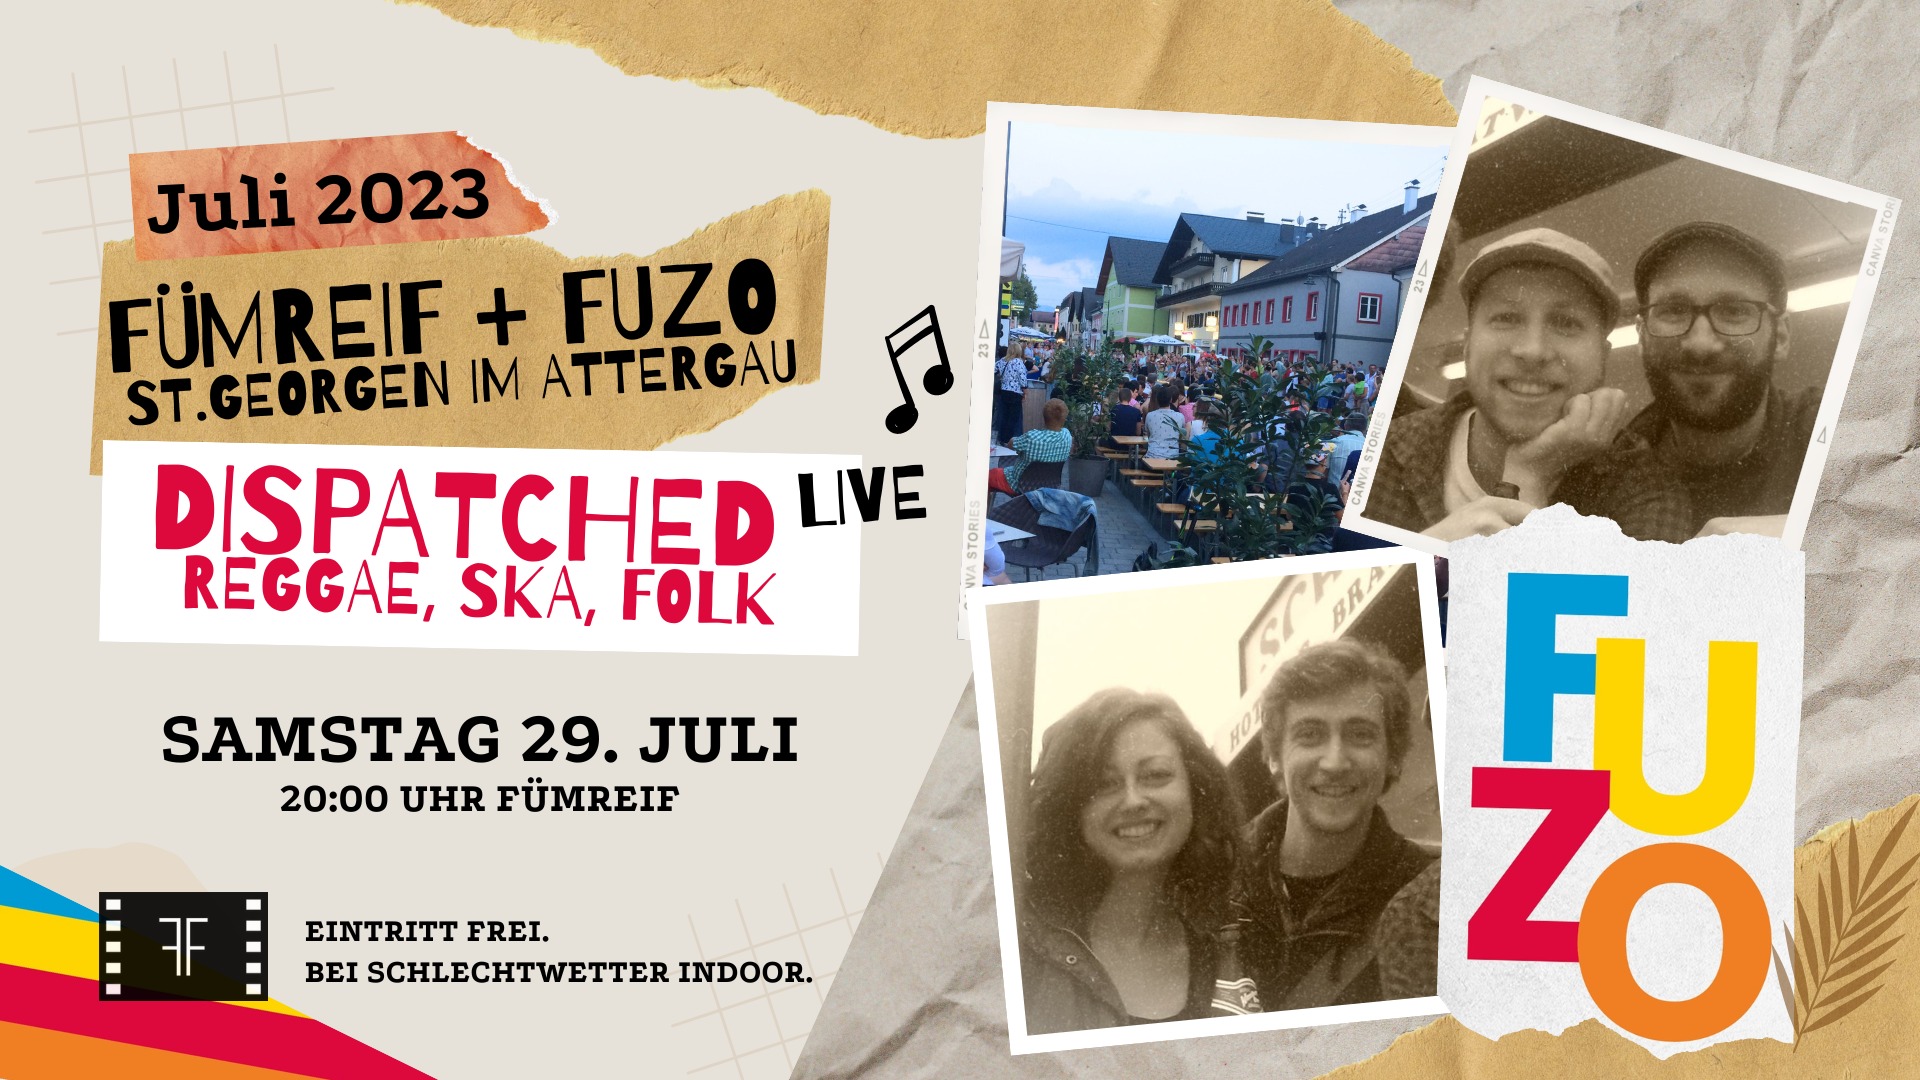 Dispatched live Fümreif Fuzo Attergau